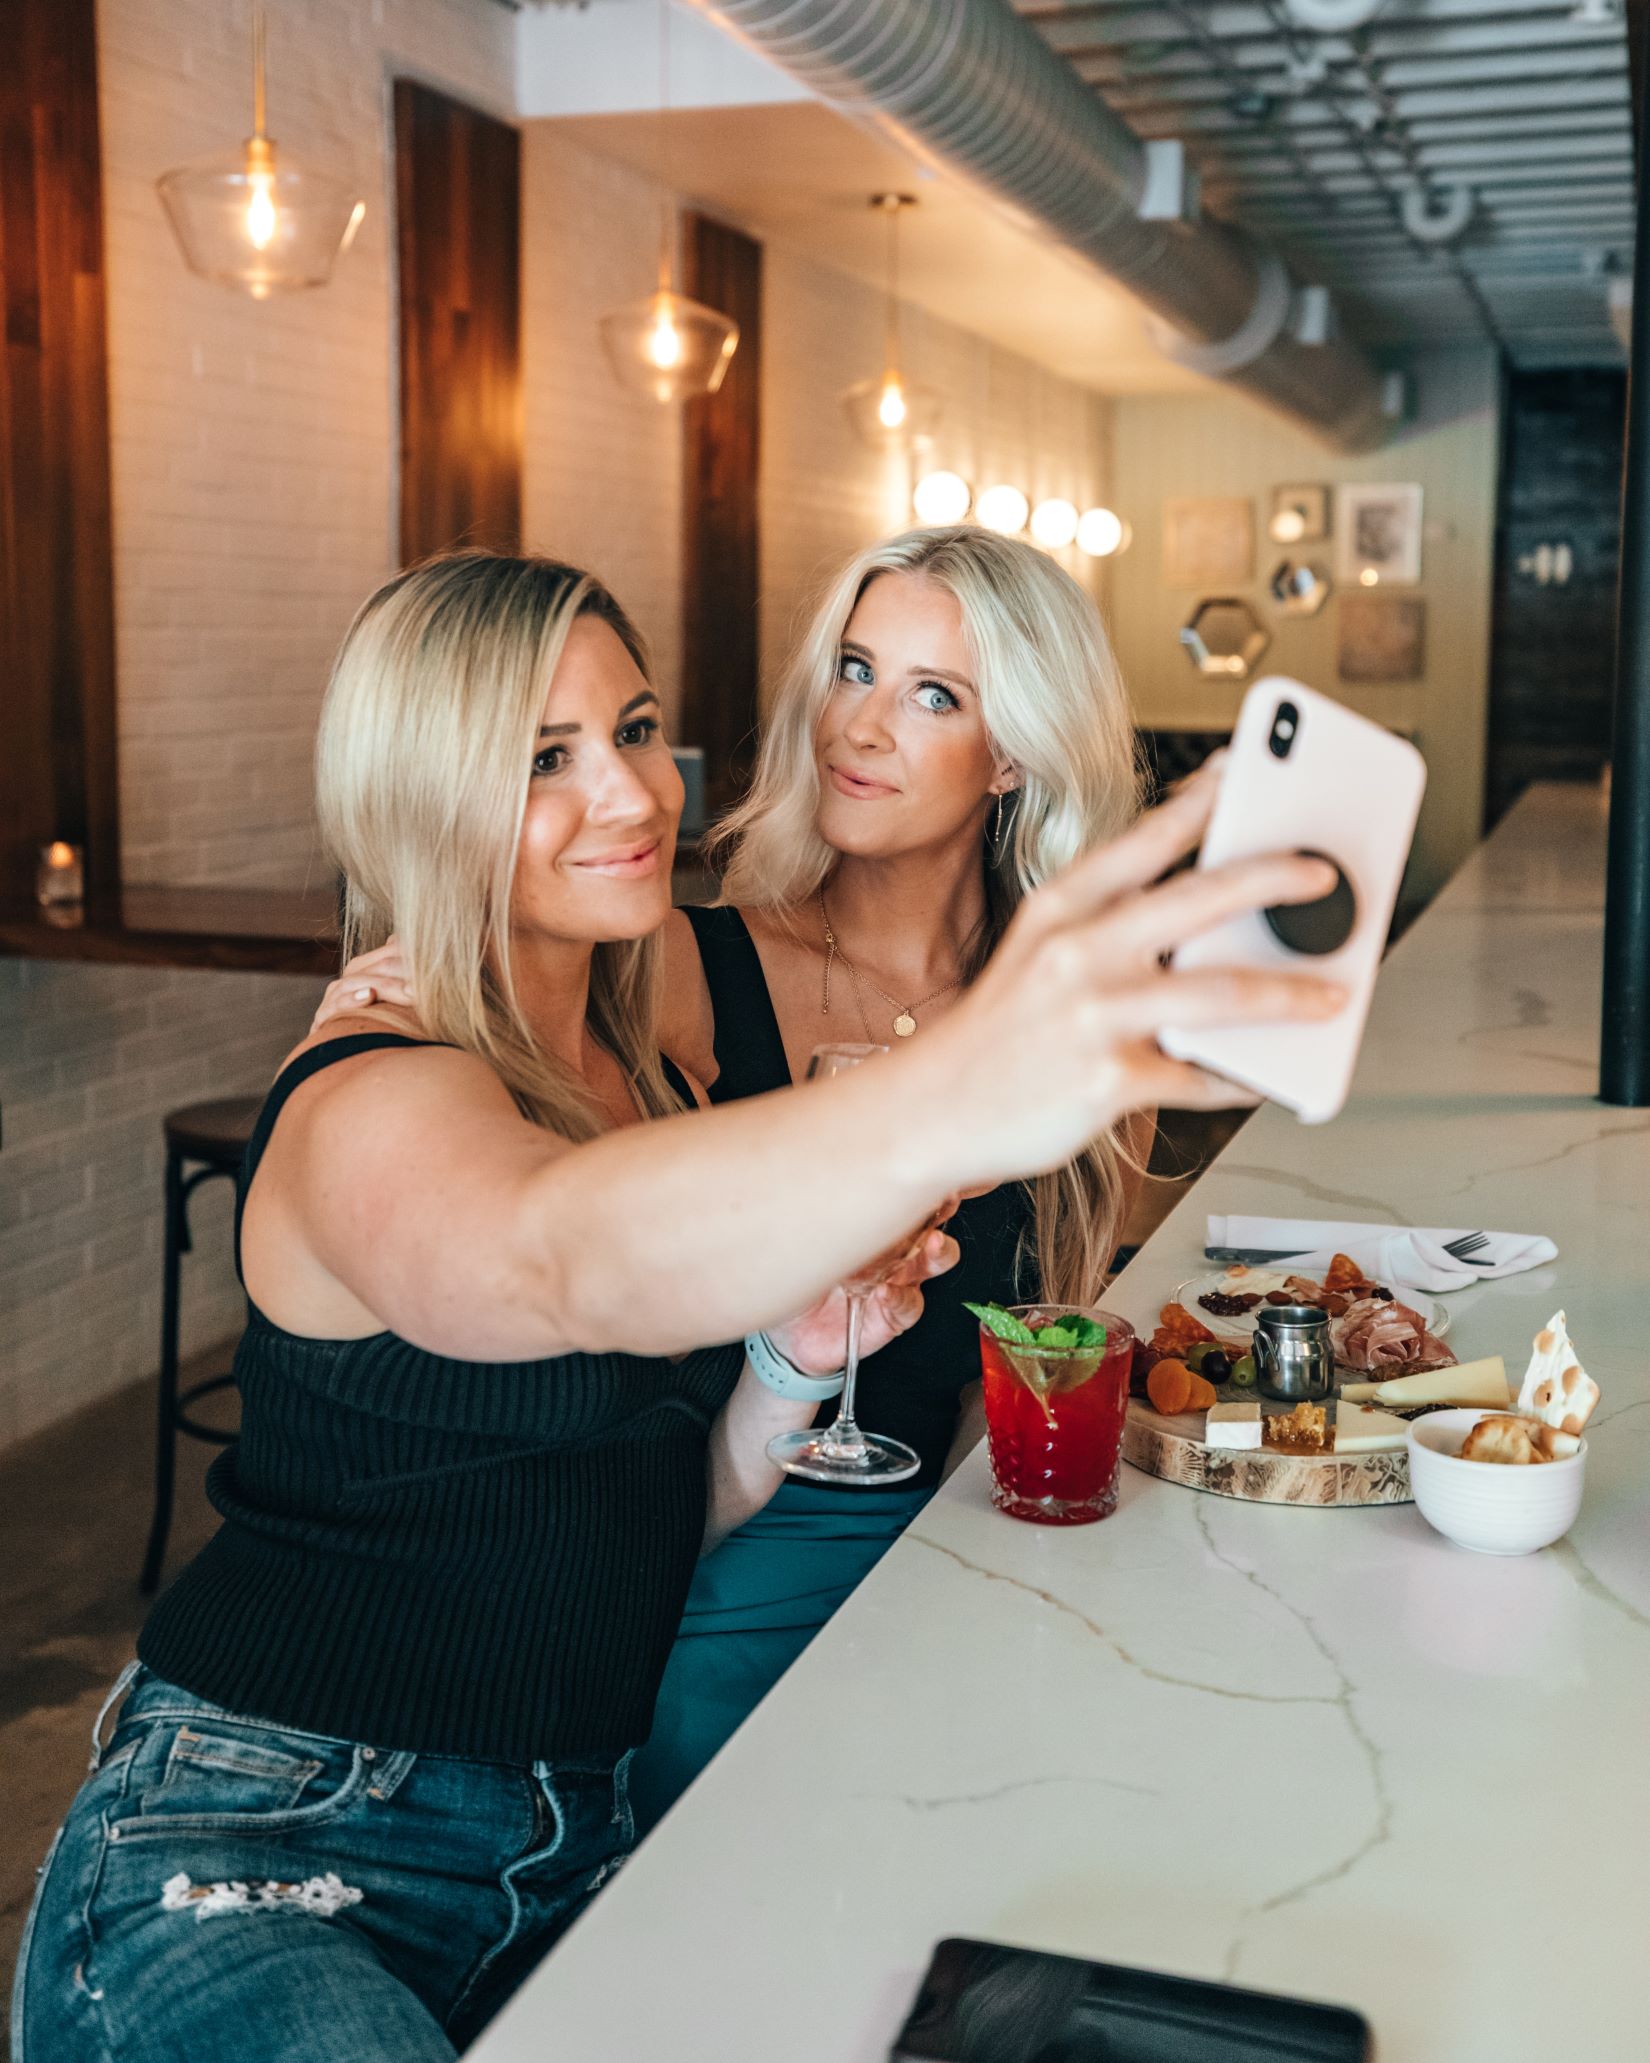 An image of two women taking a selfie